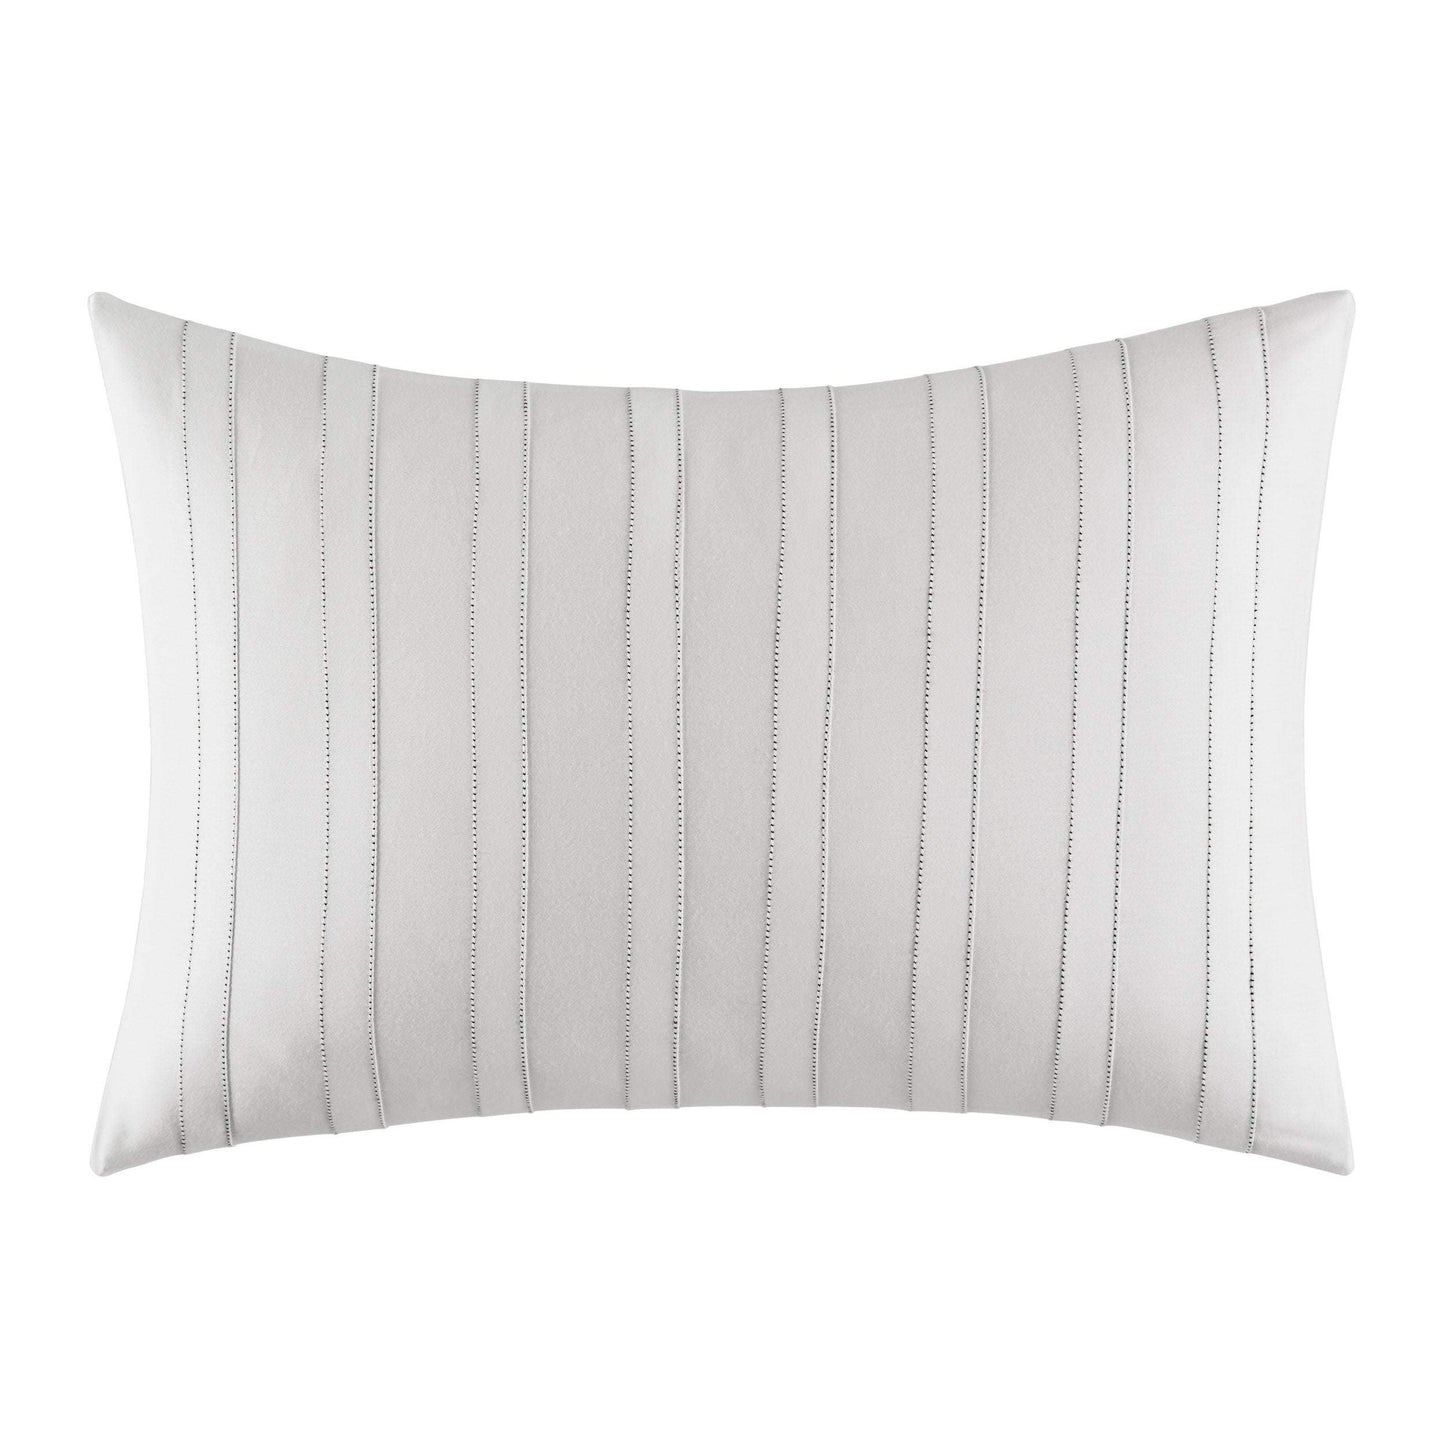 Vera Wang Pillows Mirrored Square Striped Seams Throw Pillow